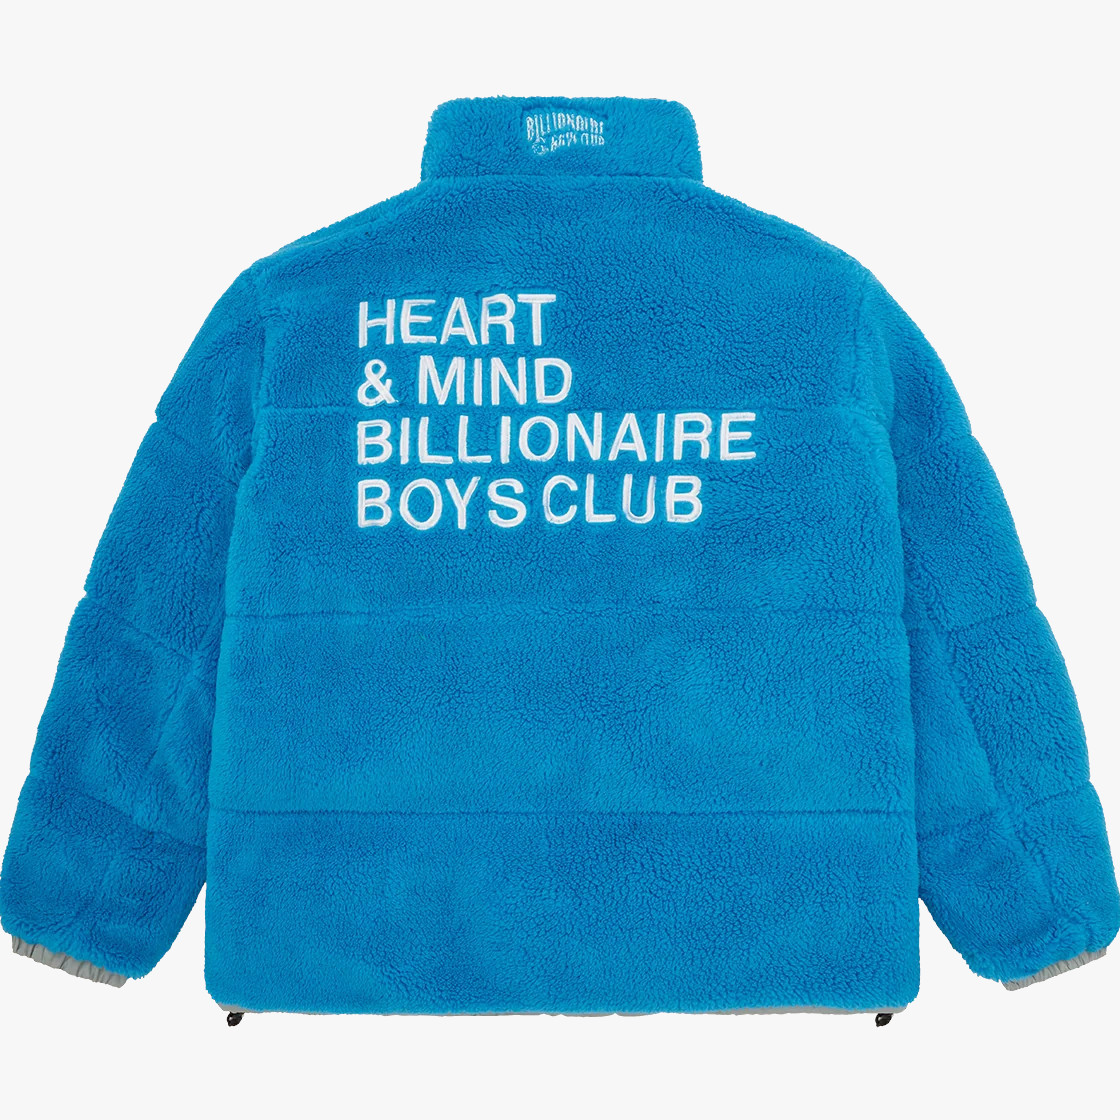 Billionaire Boys Club x First Down Reversible Bubble Down Jacket Blue/Grey